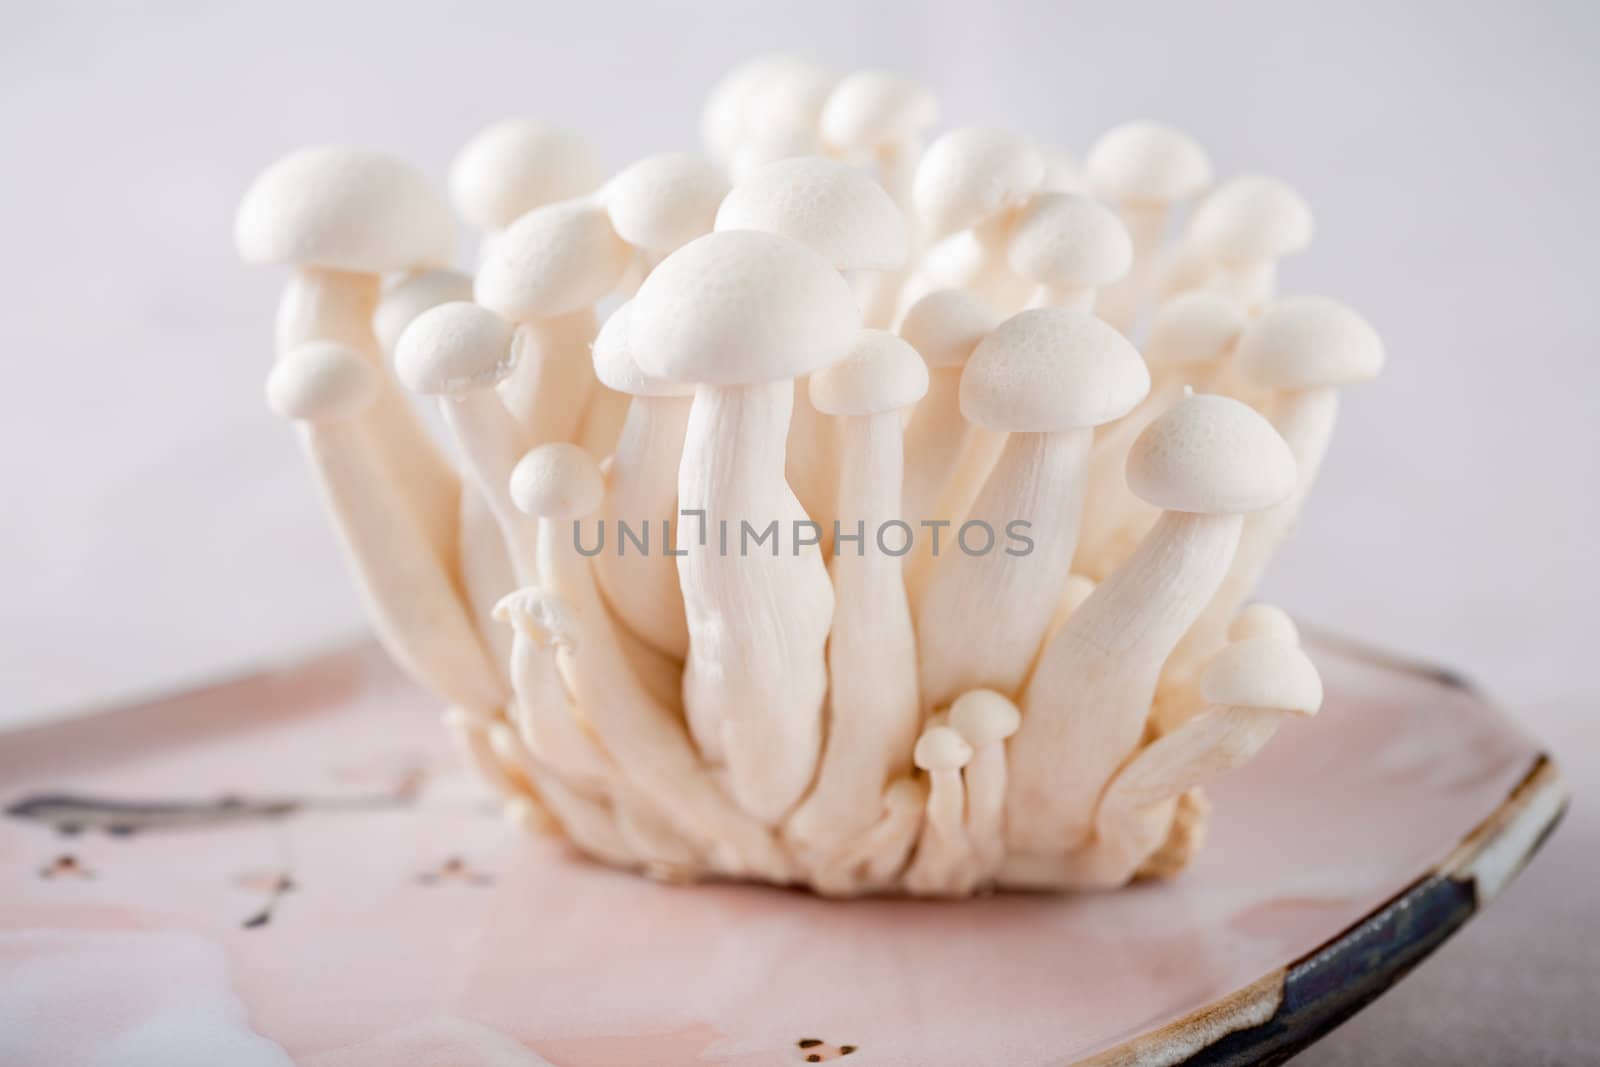 Shimeji mushrooms by Fotosmurf